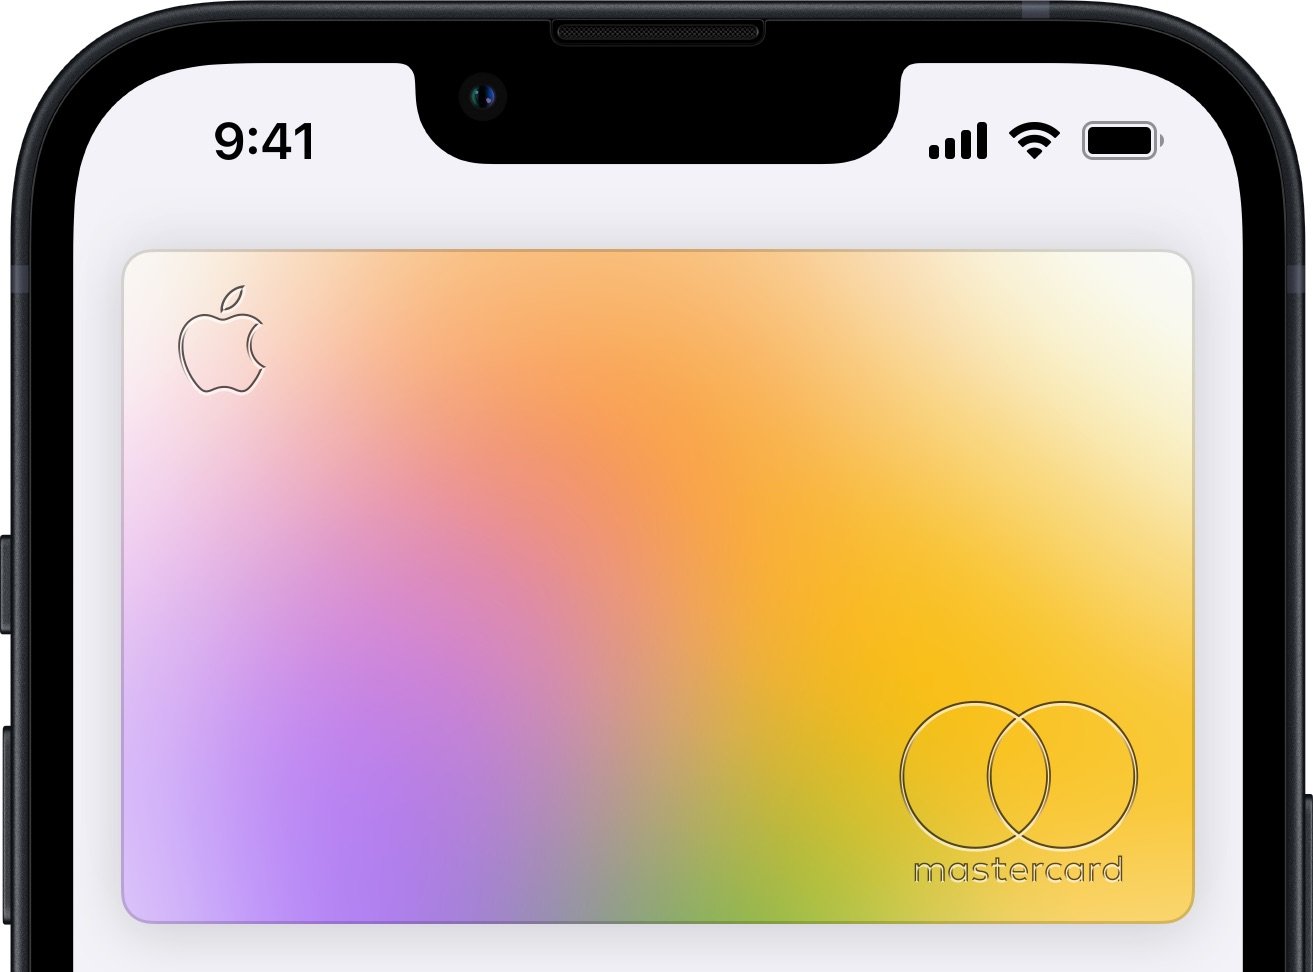 Apple Card Review: Extra Rewarding for Apple Fans - NerdWallet